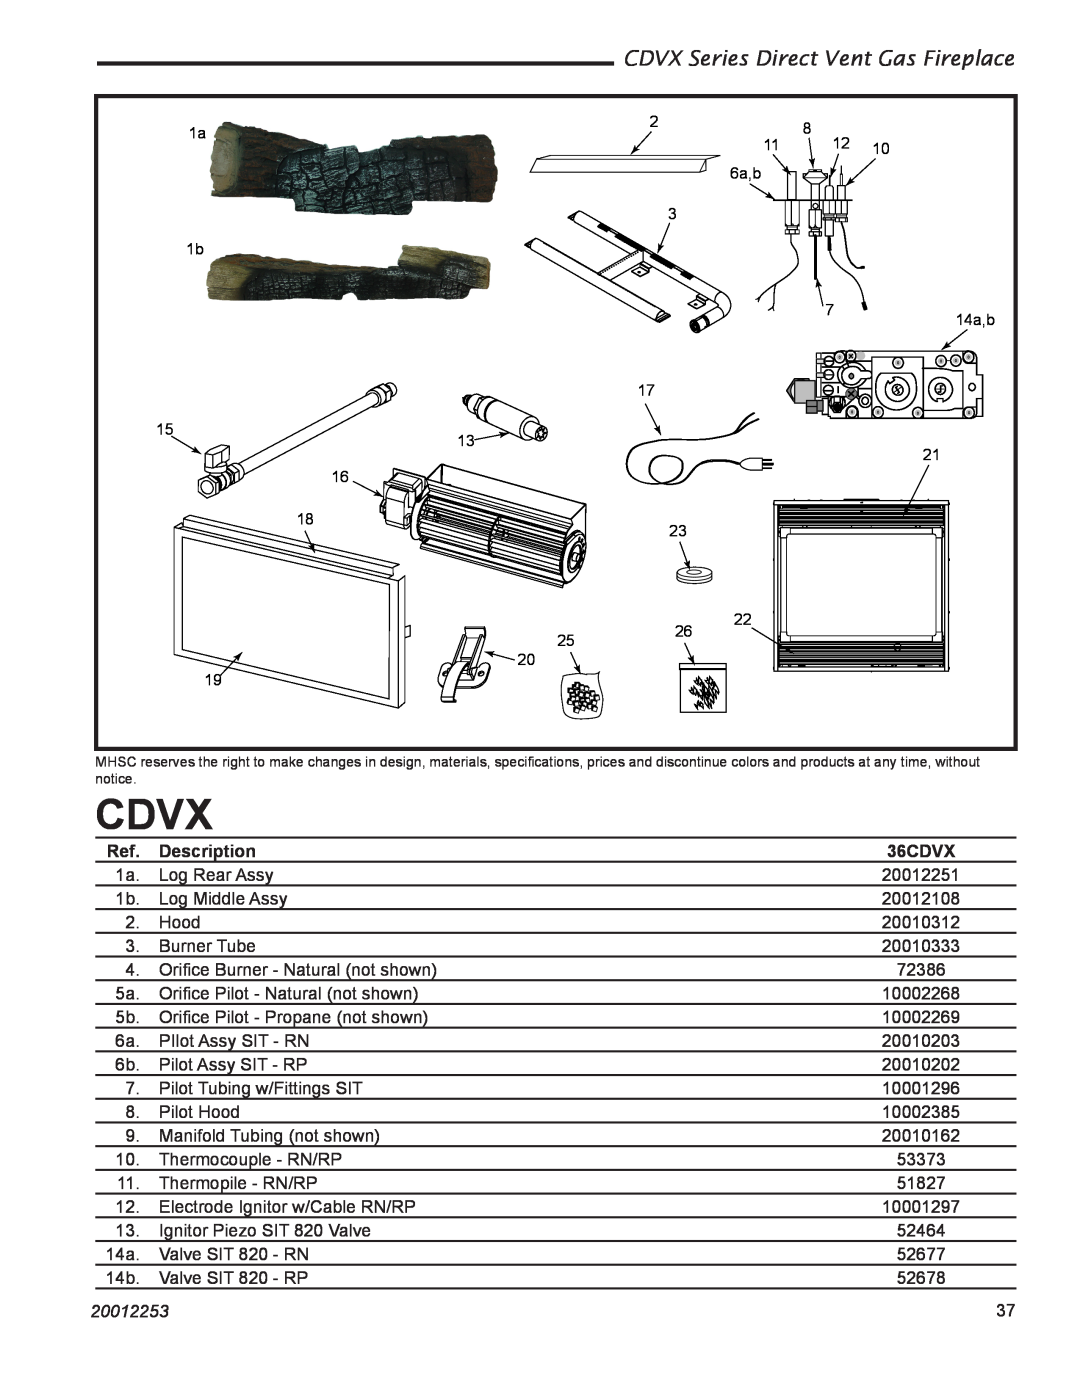 Monessen Hearth 36CDVXTRN installation instructions Cdvx, CDVX Series Direct Vent Gas Fireplace, Description, 20012253 